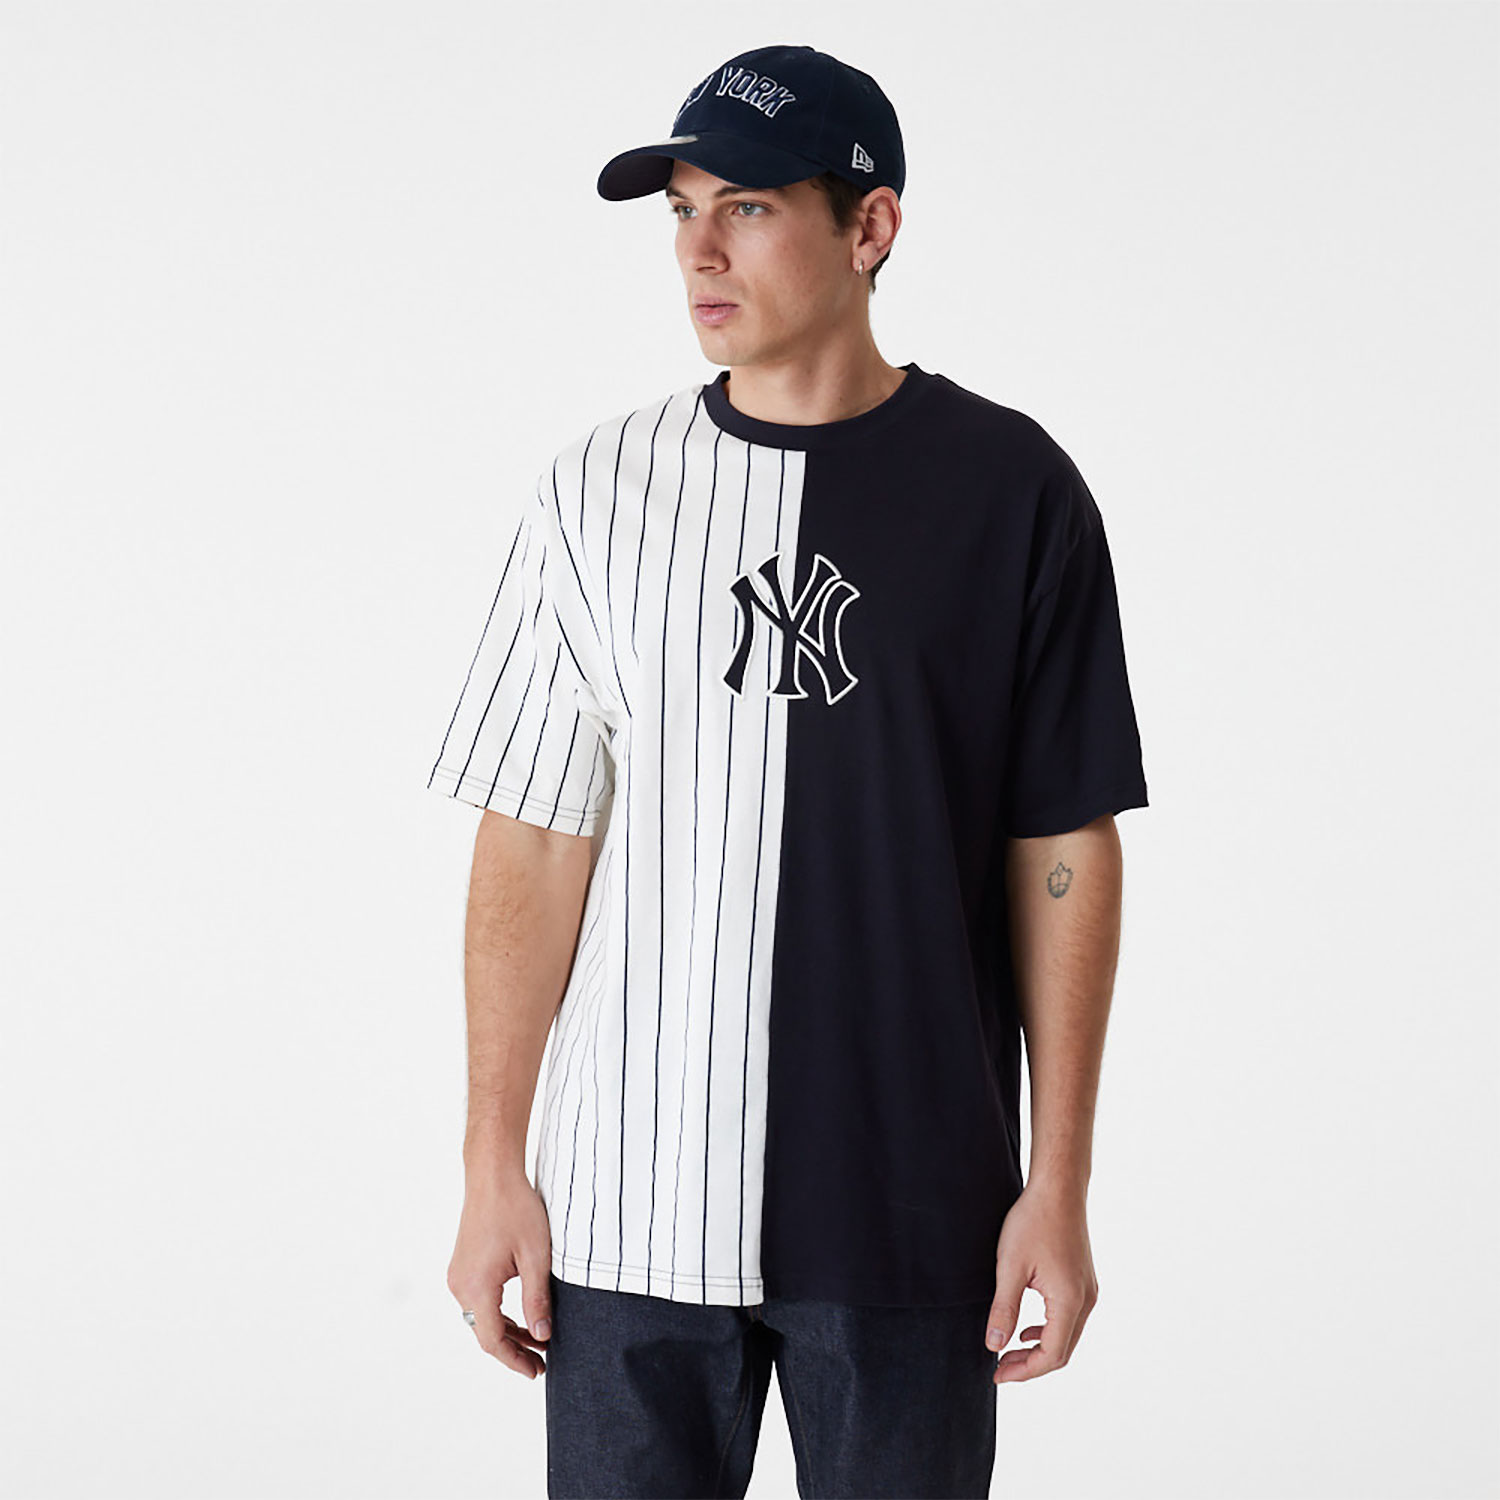 New York Yankees MLB Half Striped Oversized Black and White T-Shirt New Era Cap Adult Unisex Black